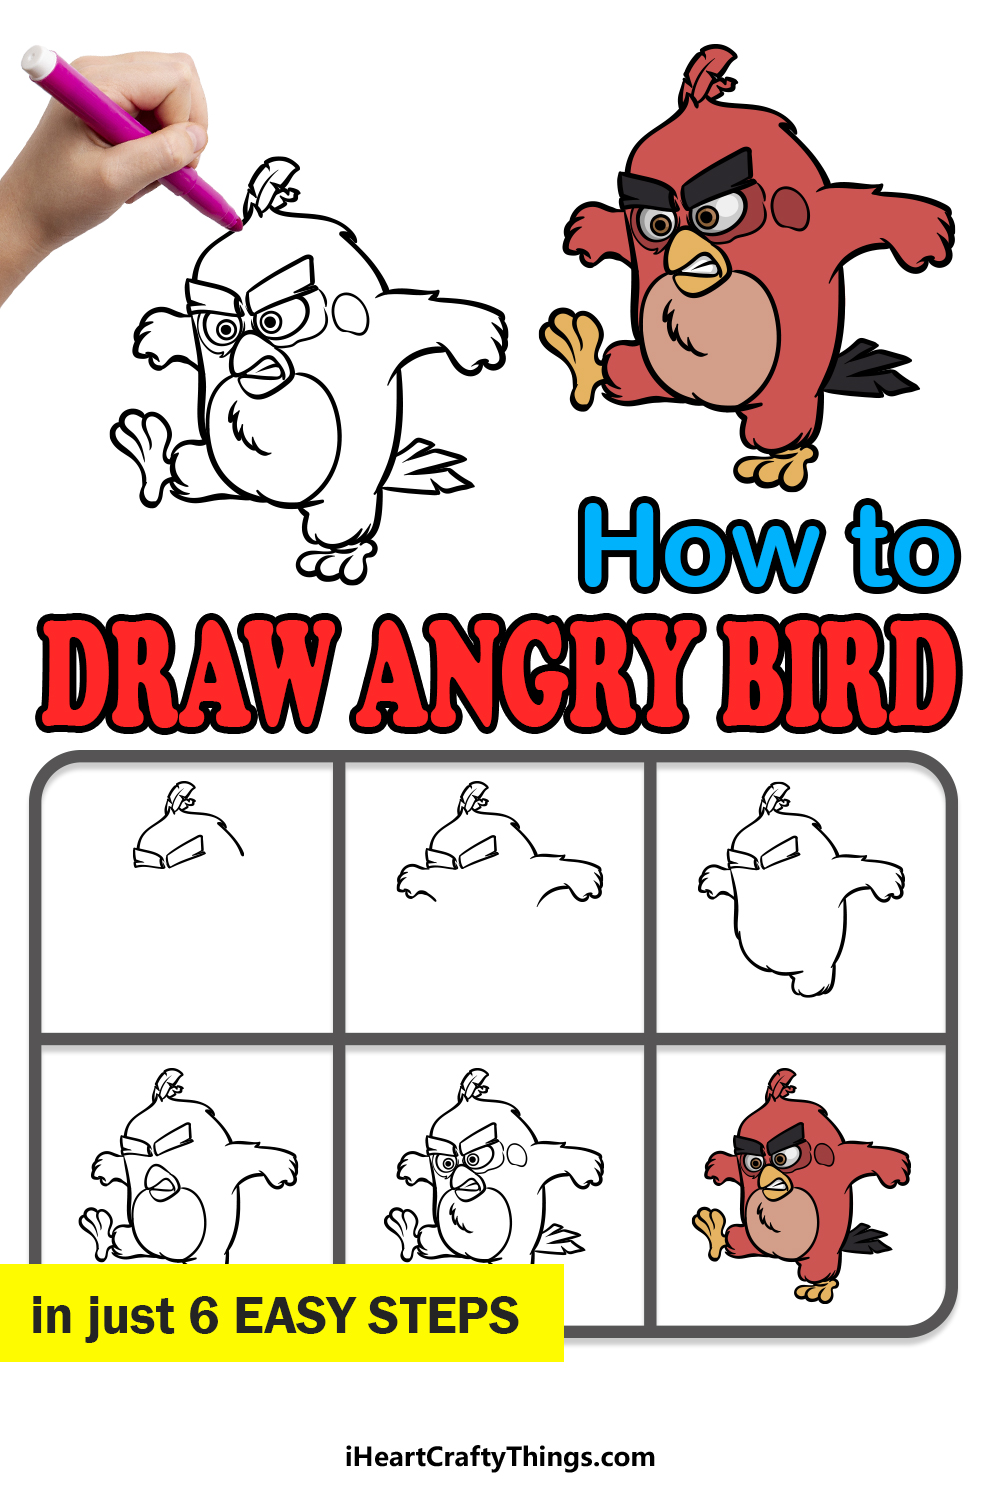 How to Draw Angry Birds (All Birds) - Instructables-saigonsouth.com.vn